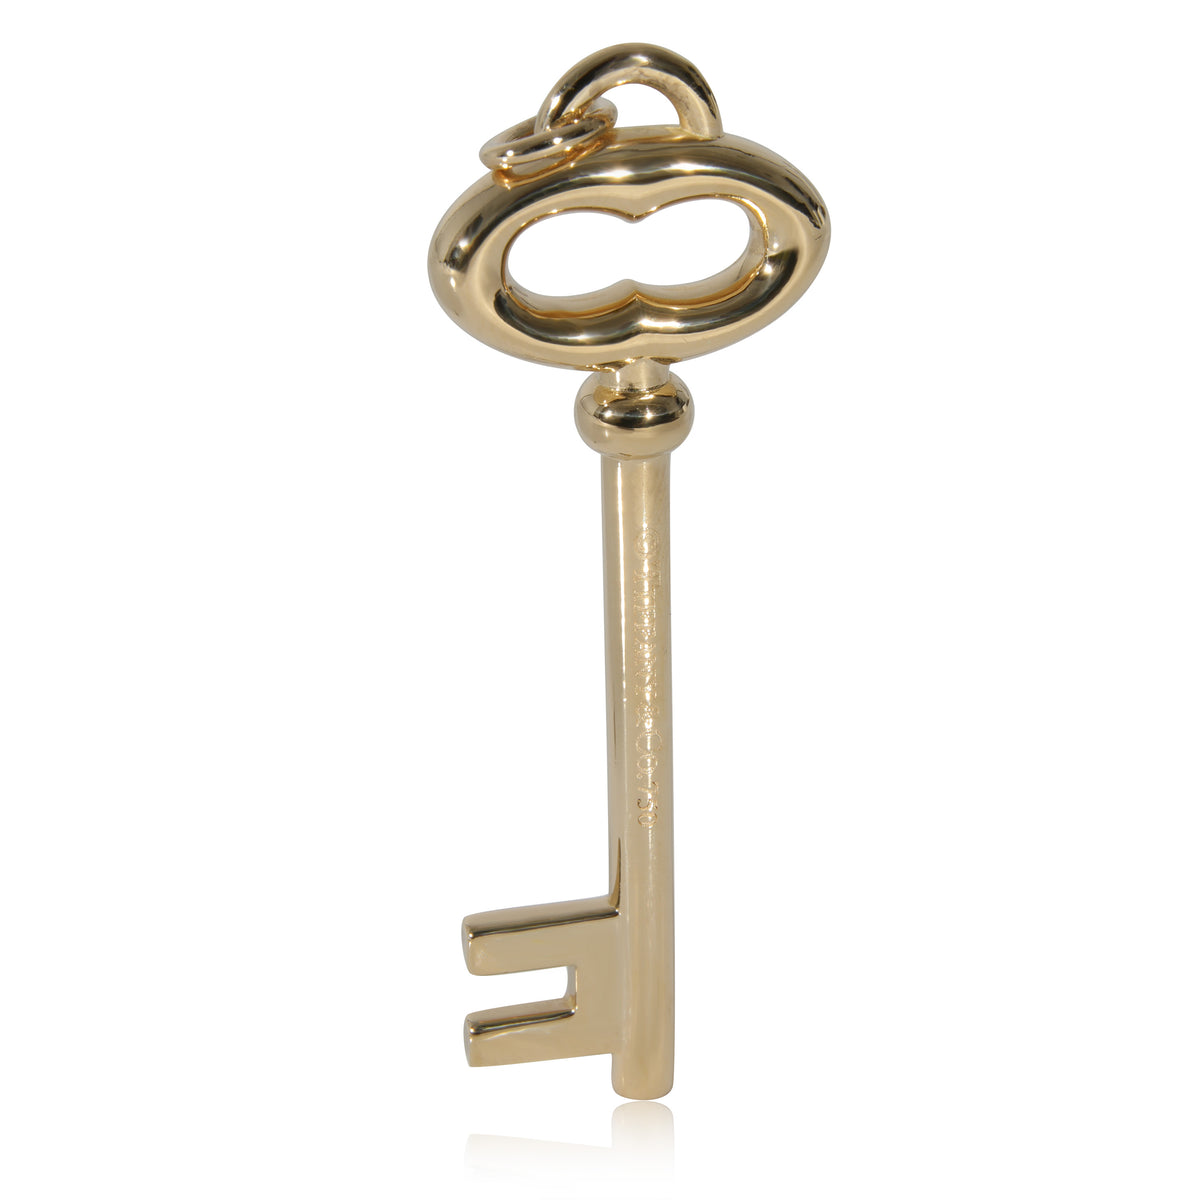 Tiffany & Co. Tiffany Keys Oval Pendant in 18k Yellow Gold